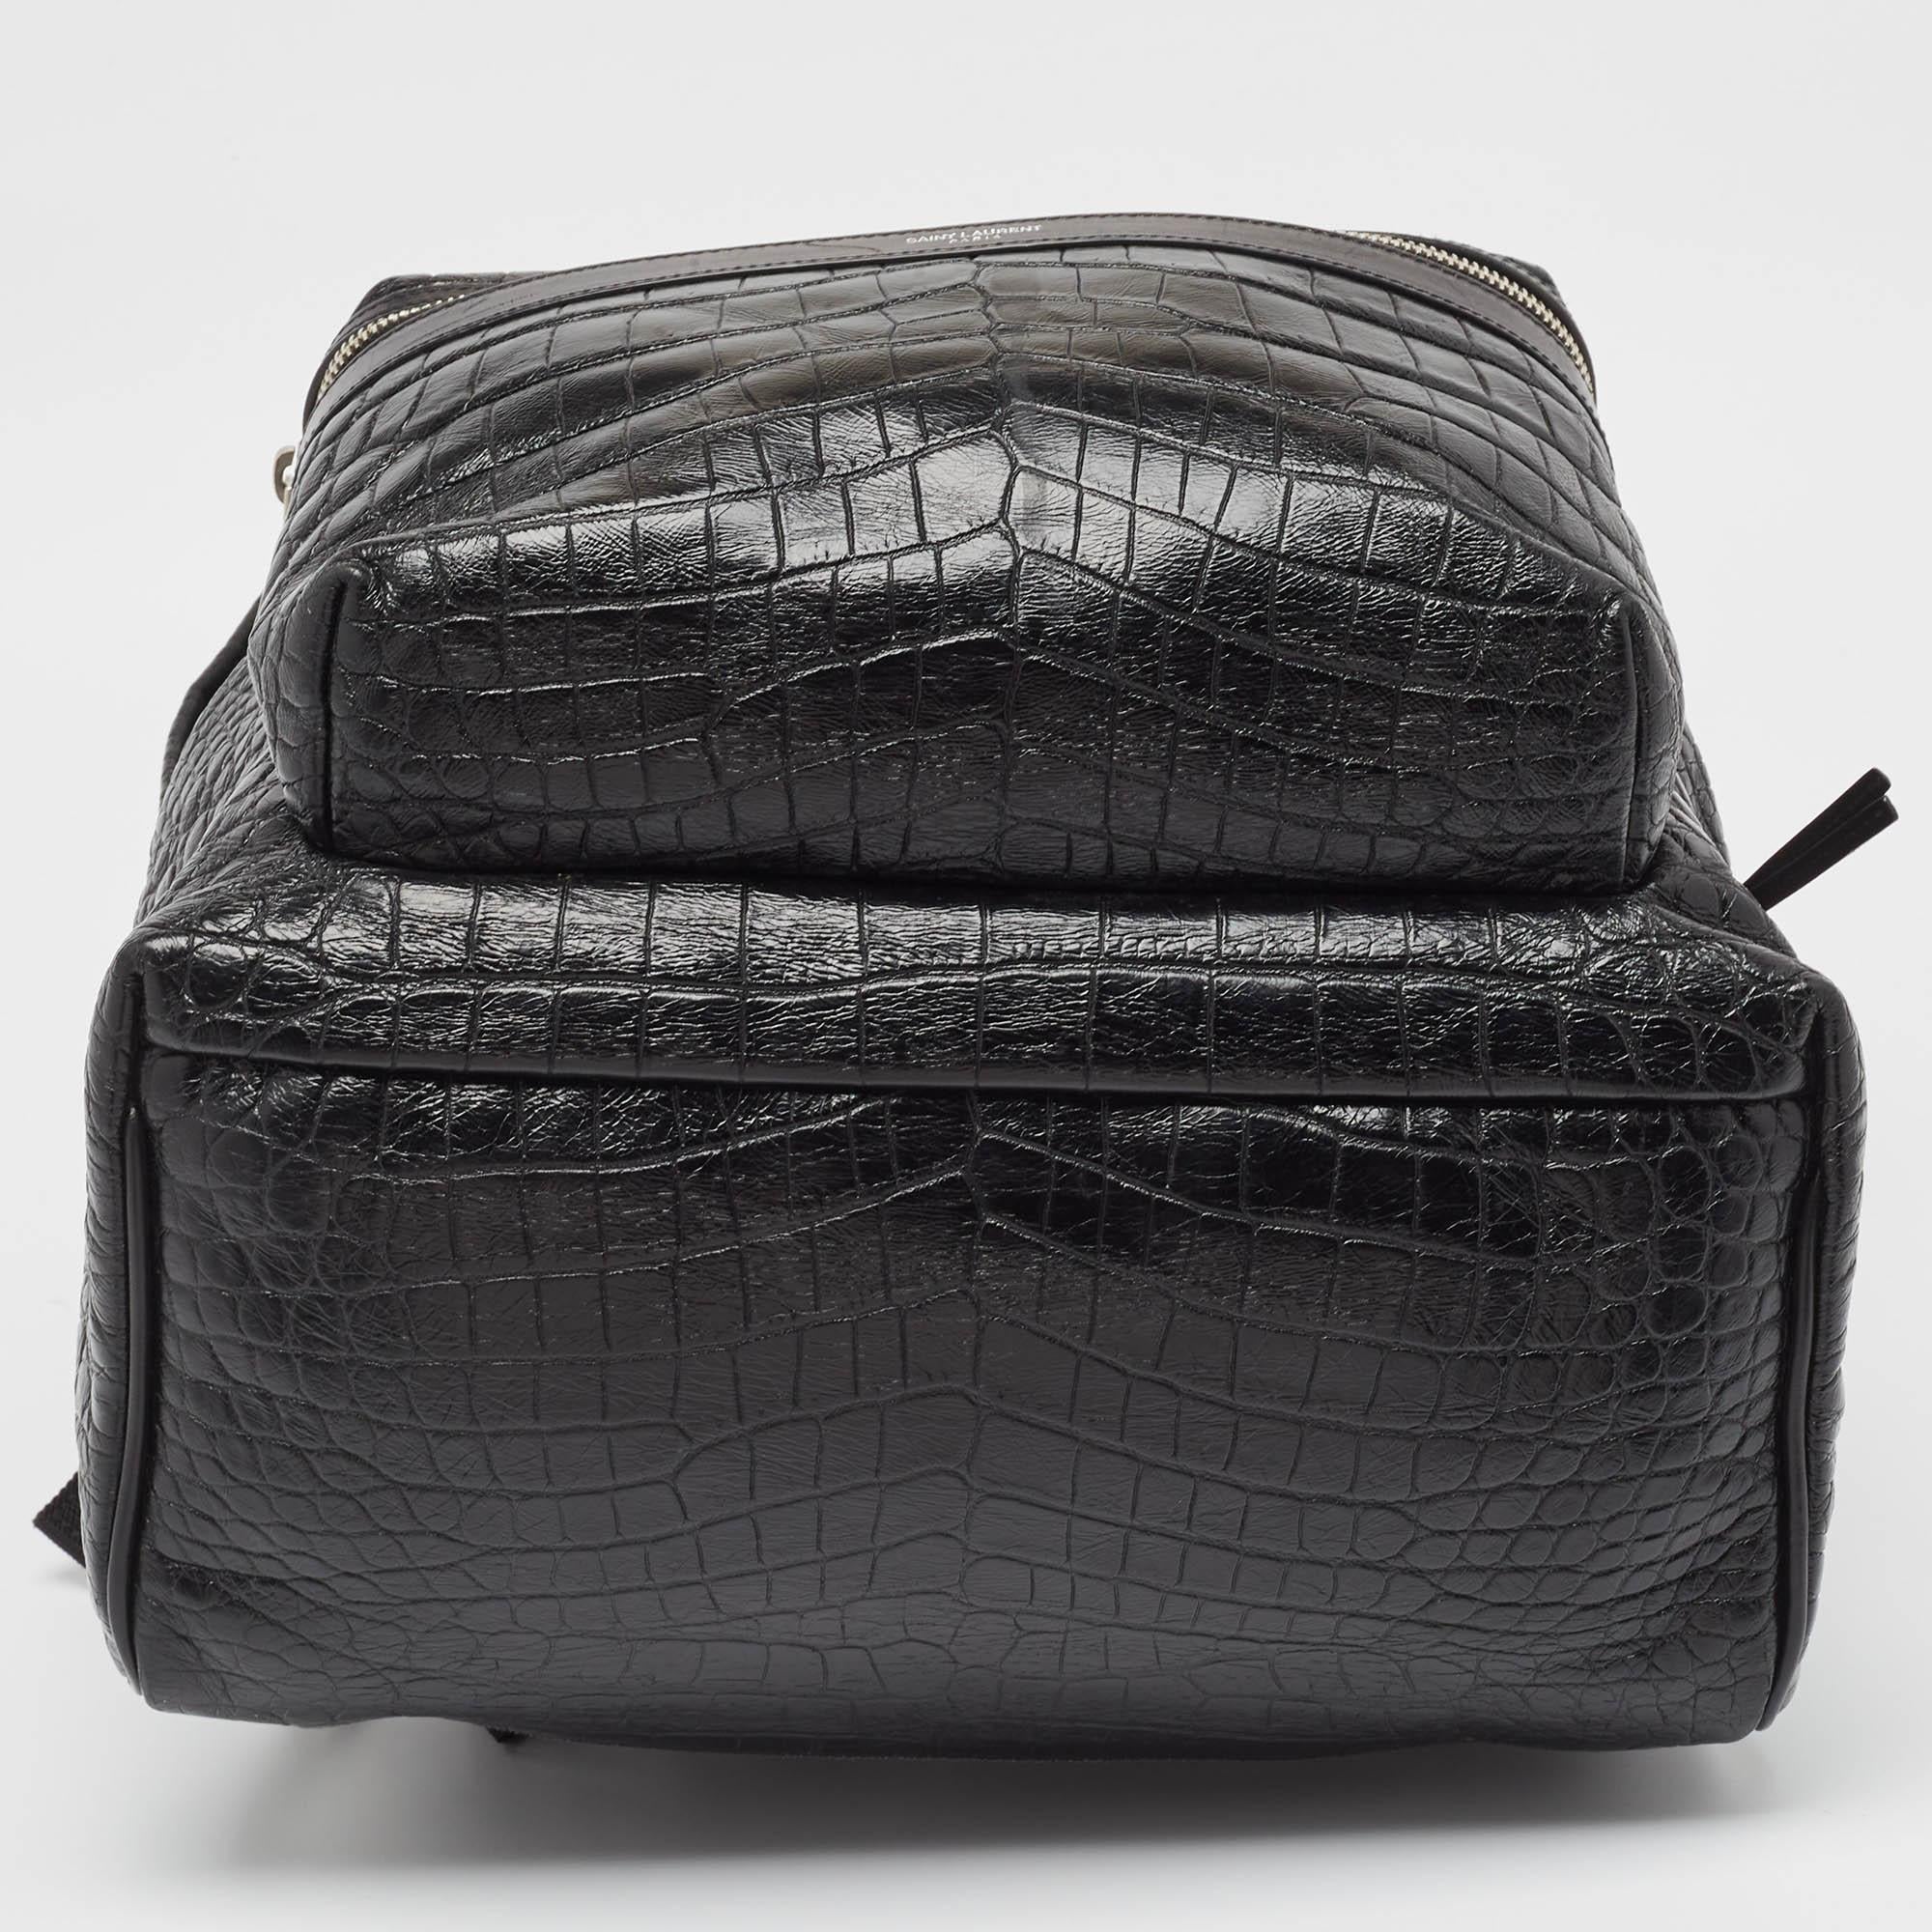  Saint Laurent Black Croc Embossed Leather City Backpack 5